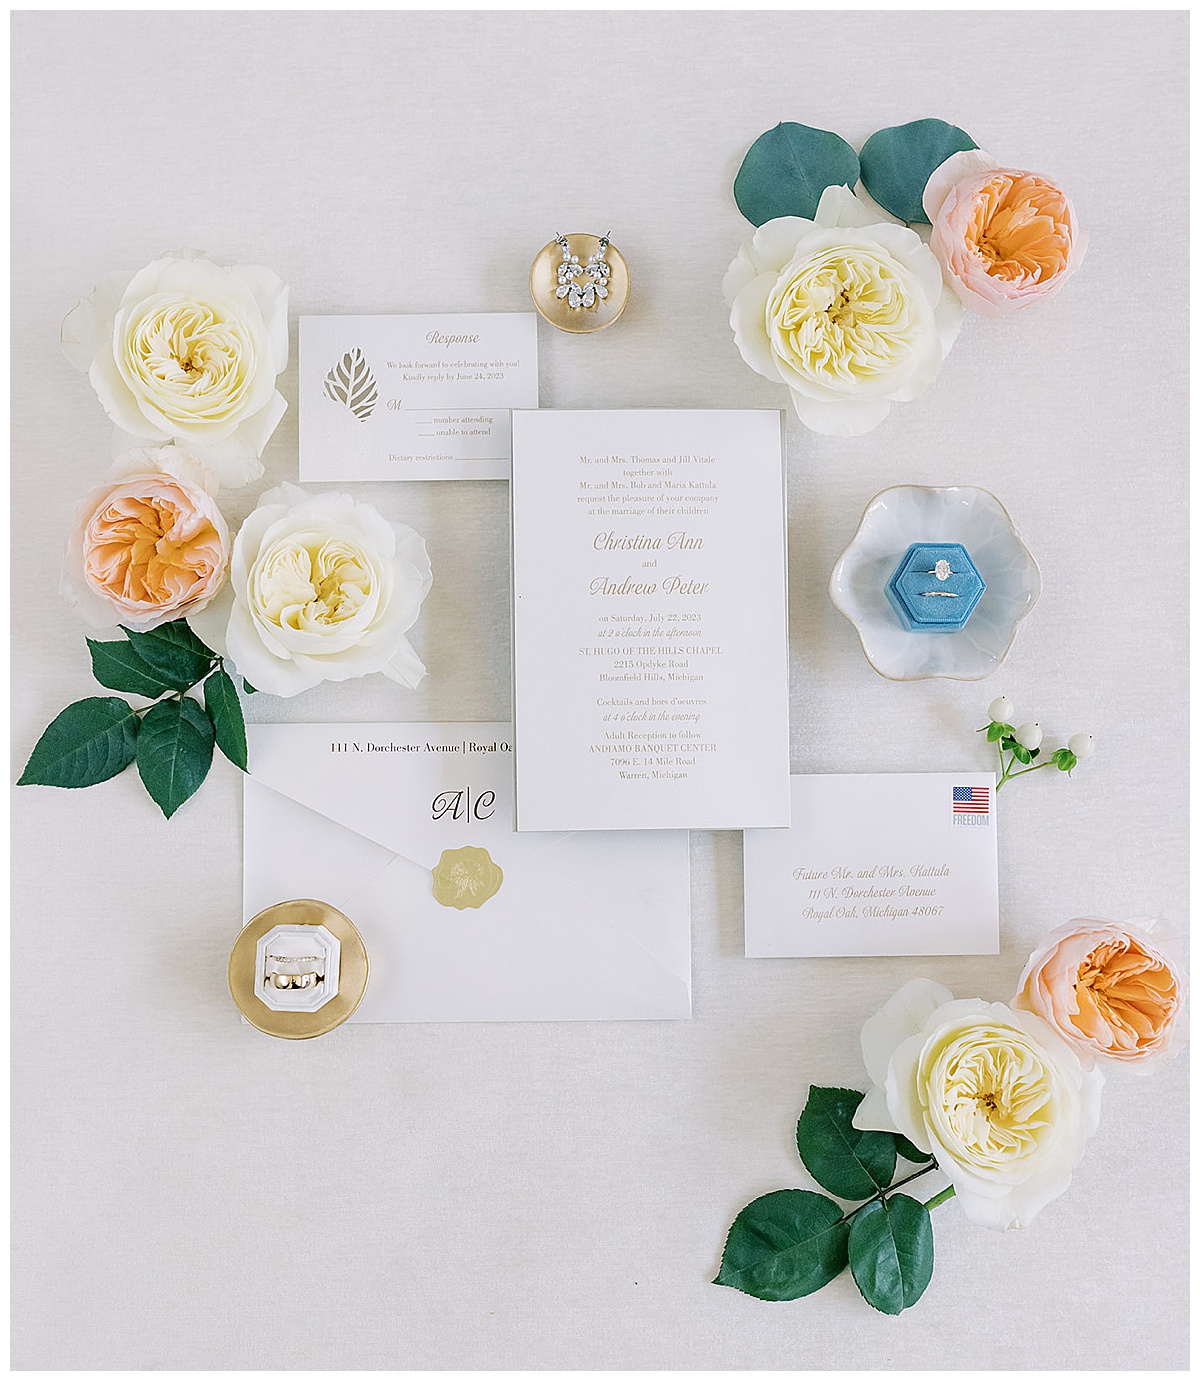 Stunning wedding invitation suite for Luxury Wedding at Andiamo Italia